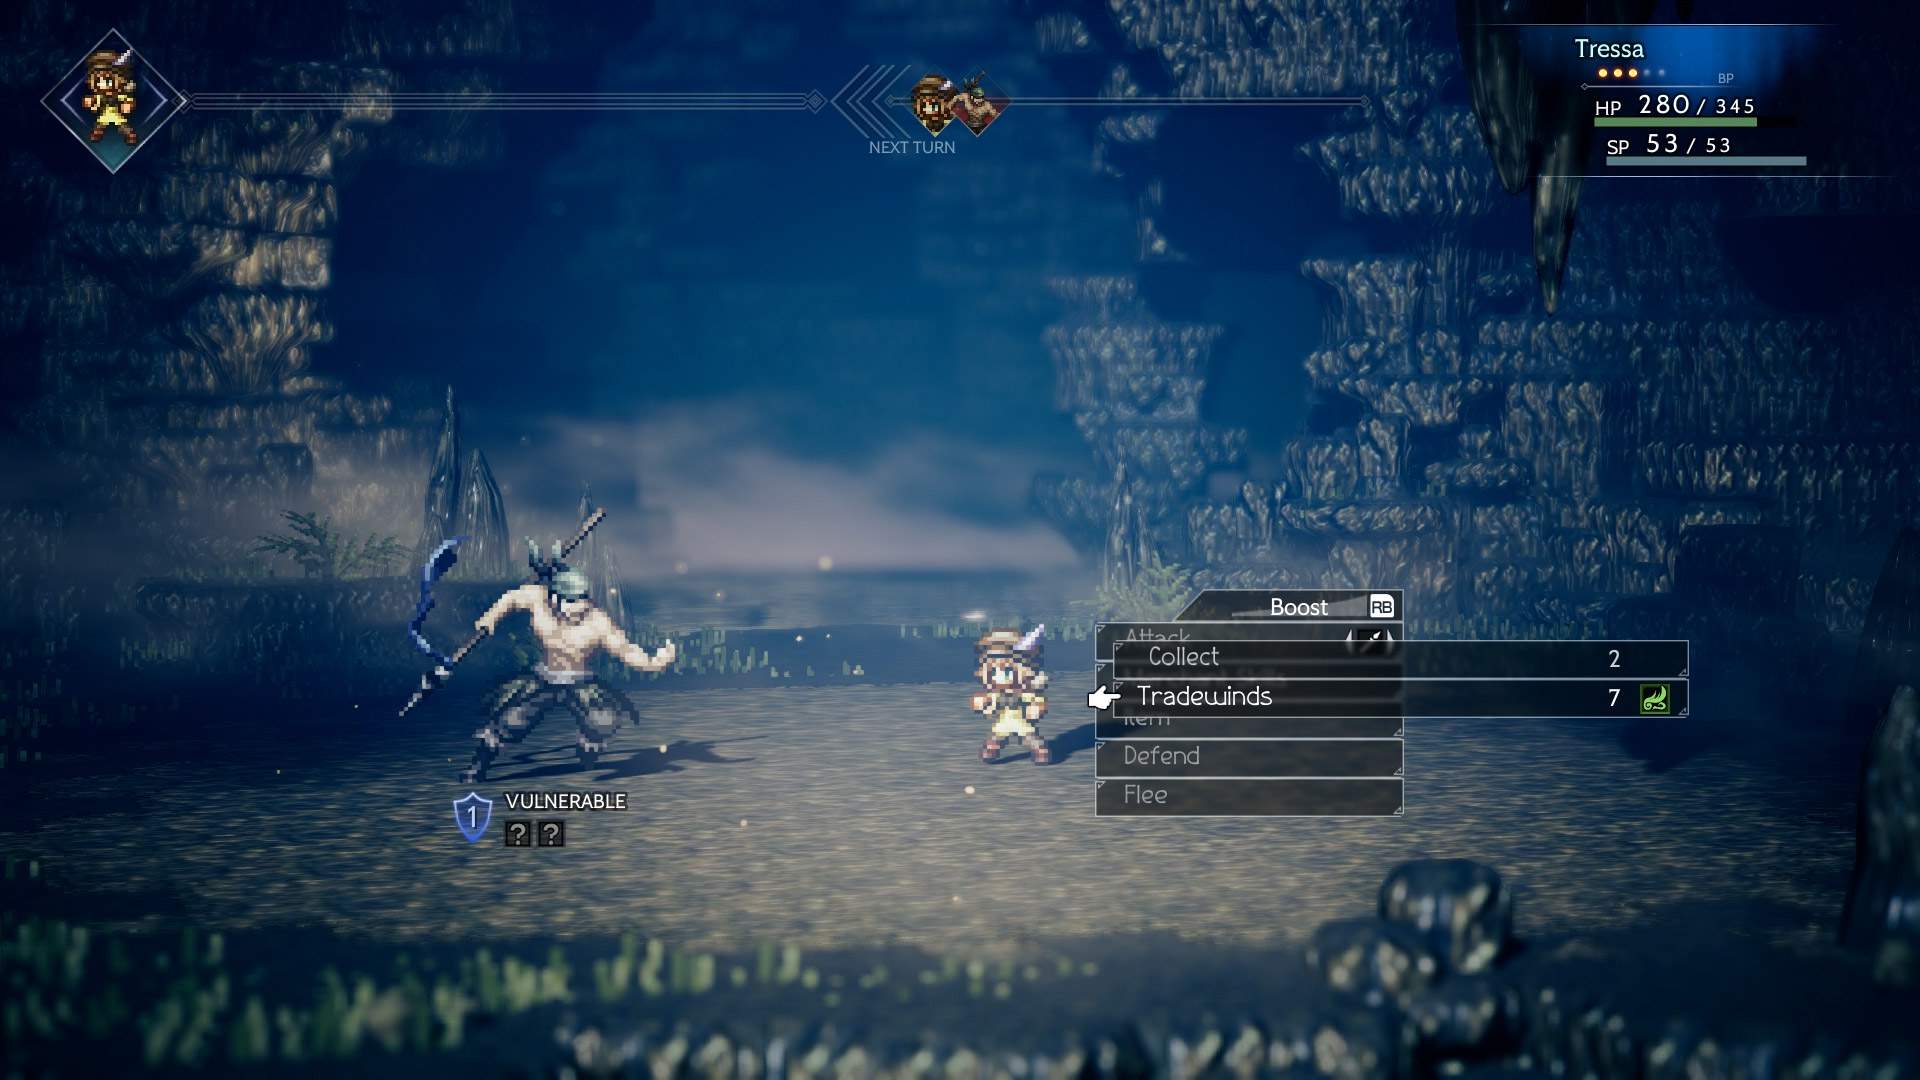 In game battle screenshot in a dark dungeon, showing Tressa in turn based battle against an enemy.